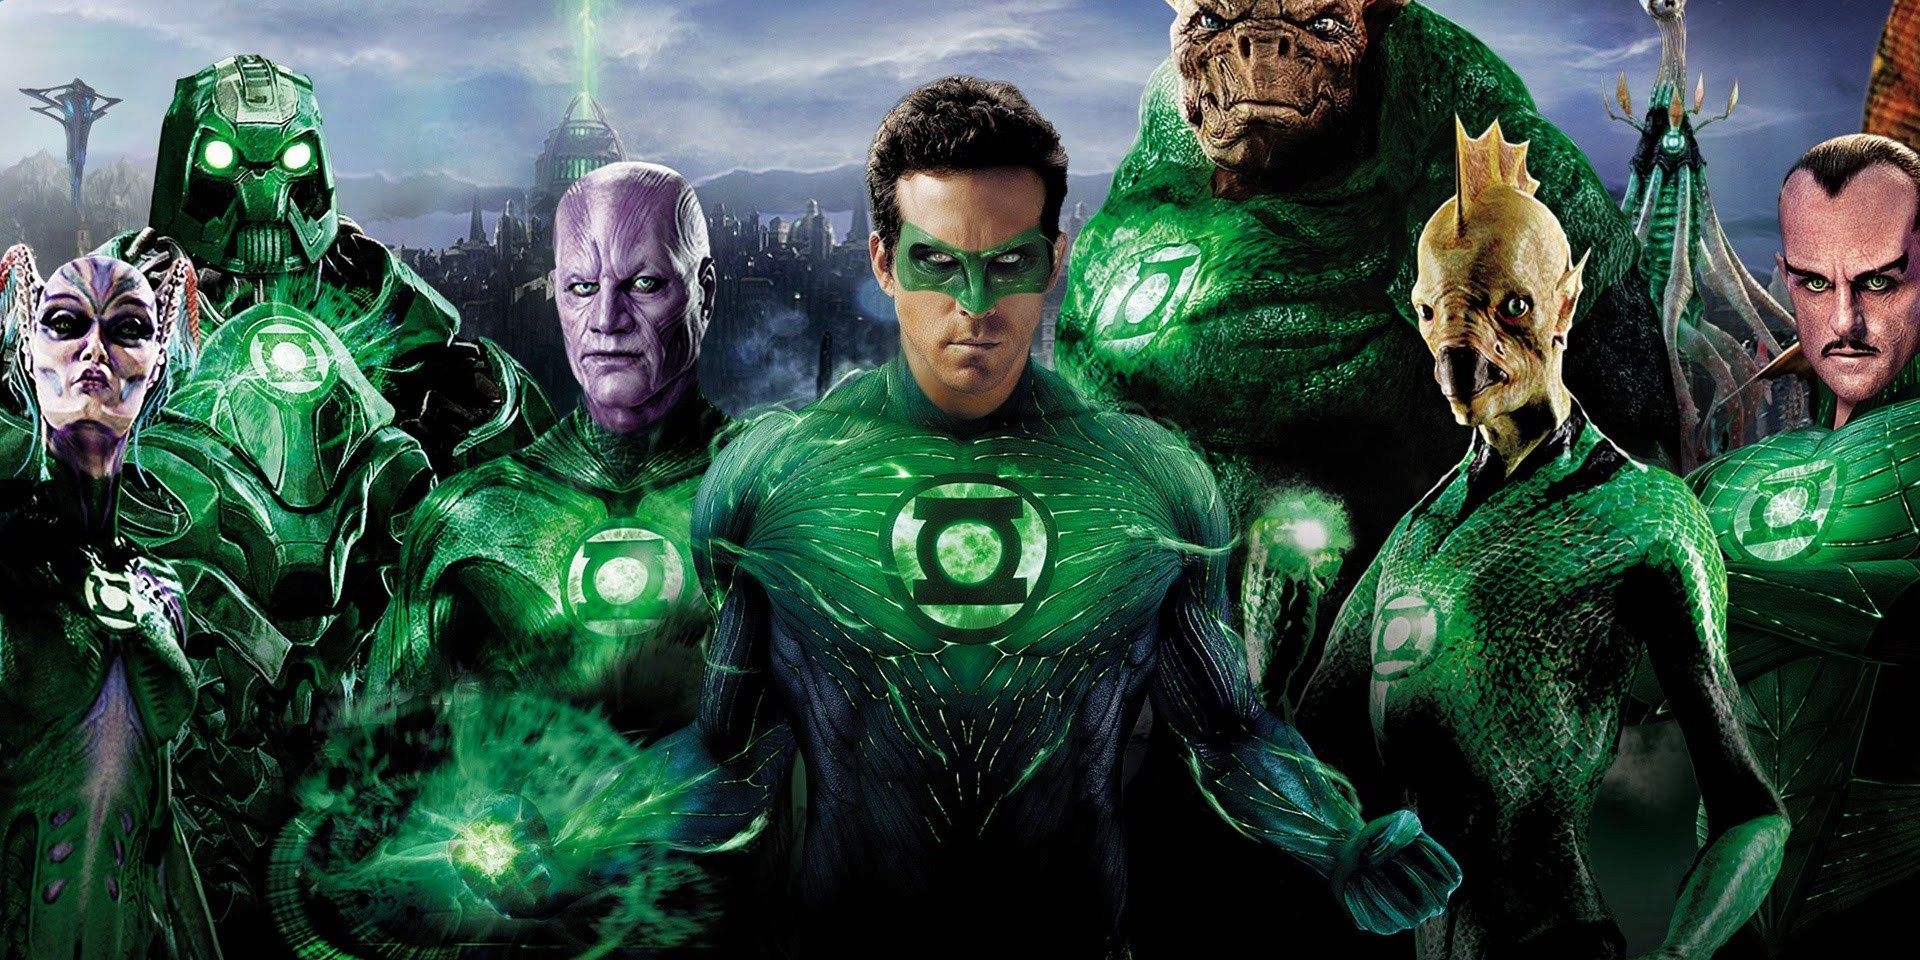 2011's cinematic Green Lantern Corps